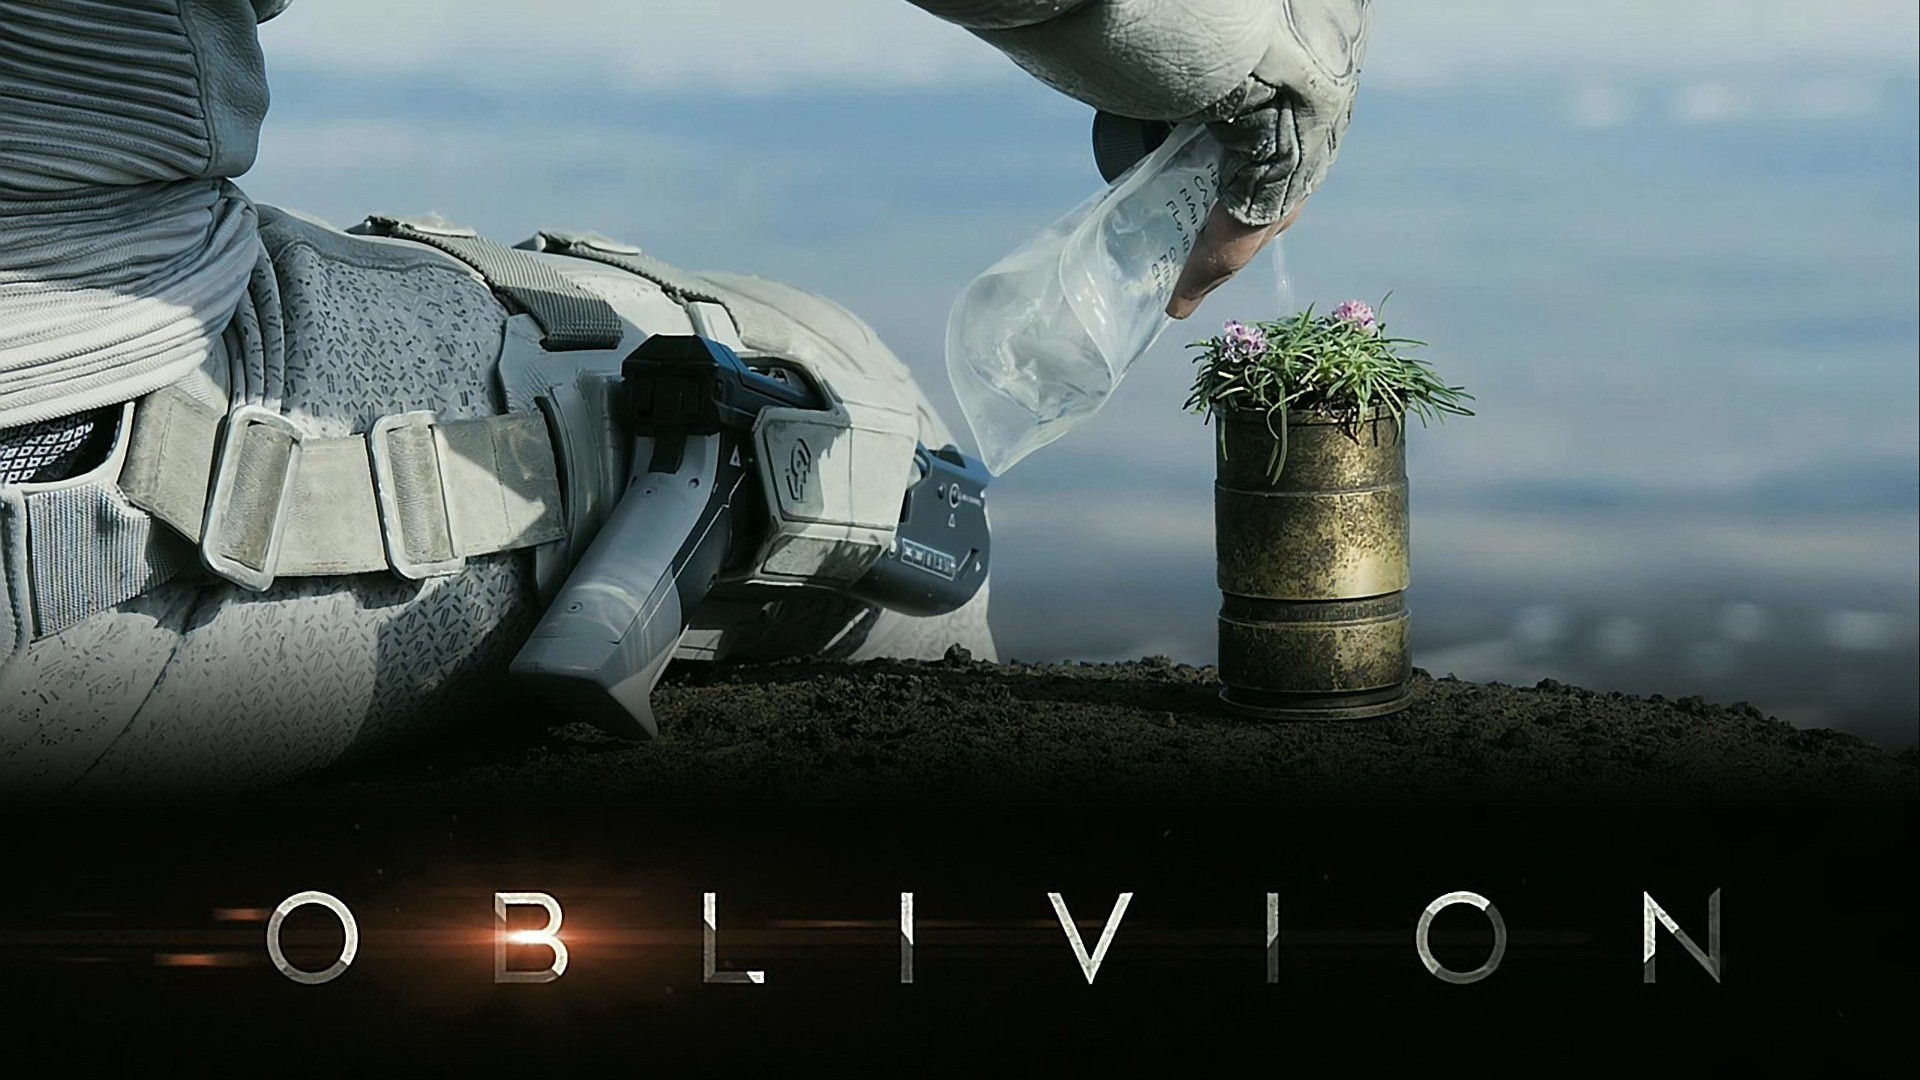 Oblivion (movie) Wallpaper